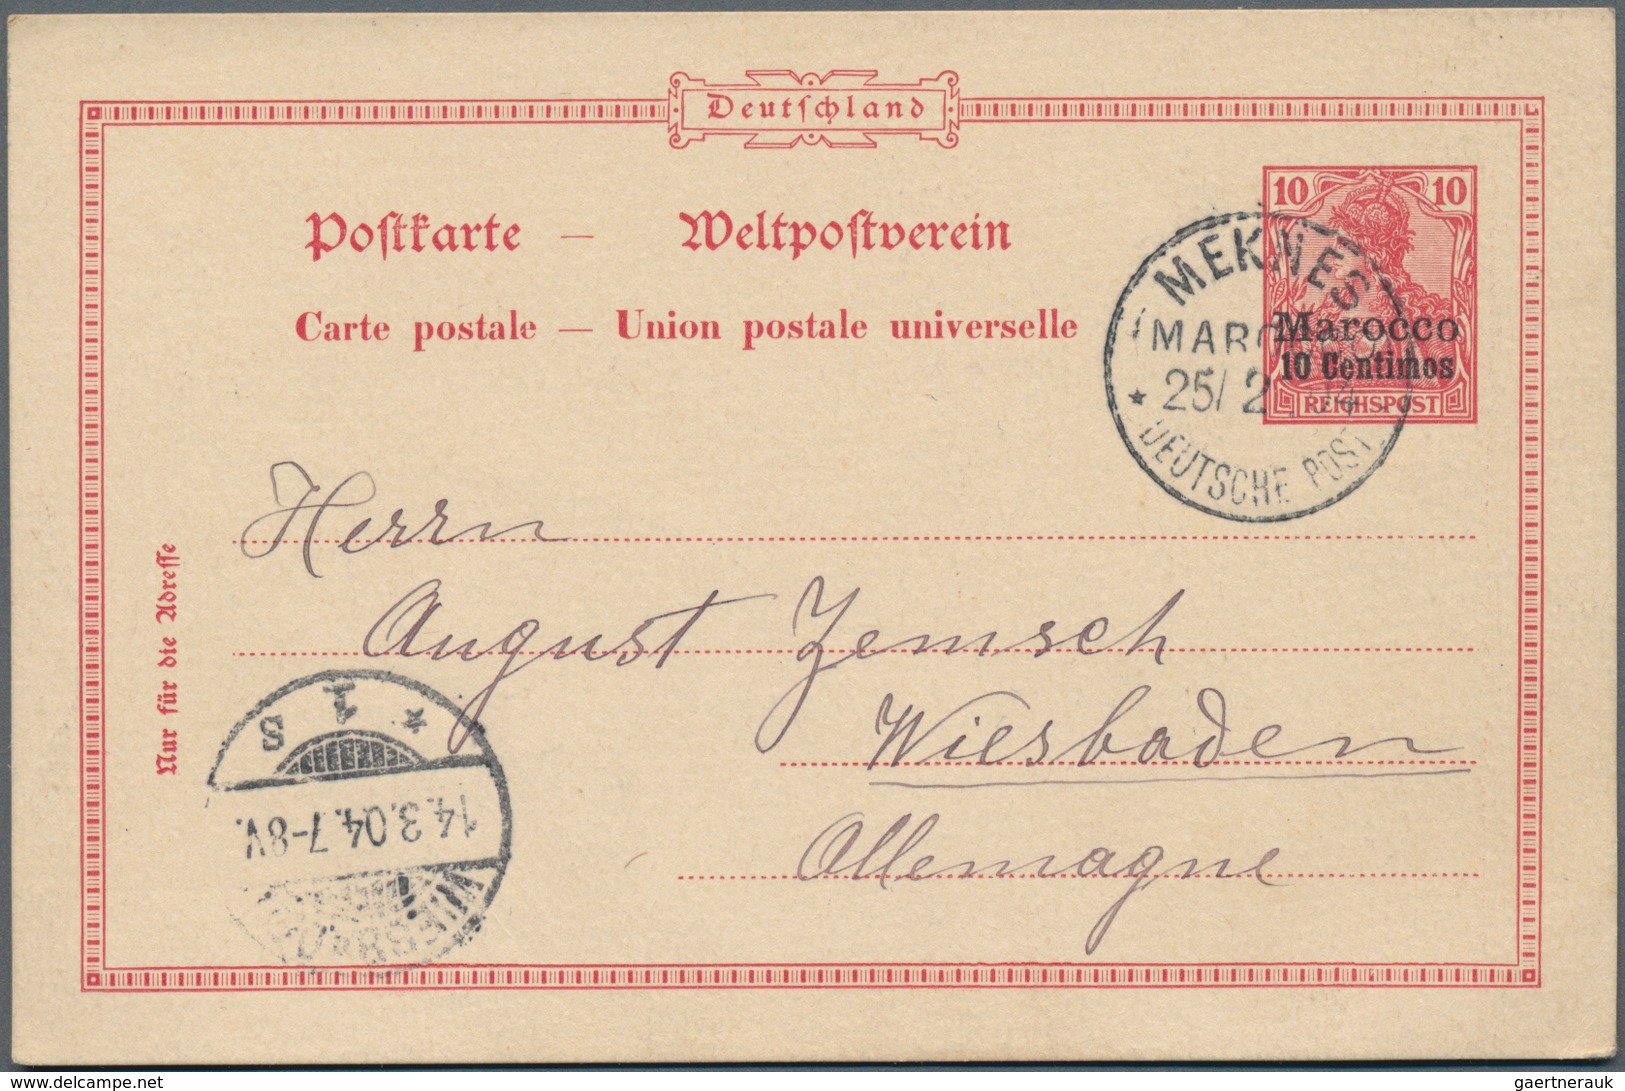 Deutsche Post In Der Türkei: 1880/1905 (ca.), 39 Belege, Zusätzlich 13 Belege Deutsche Post In Marok - Turchia (uffici)